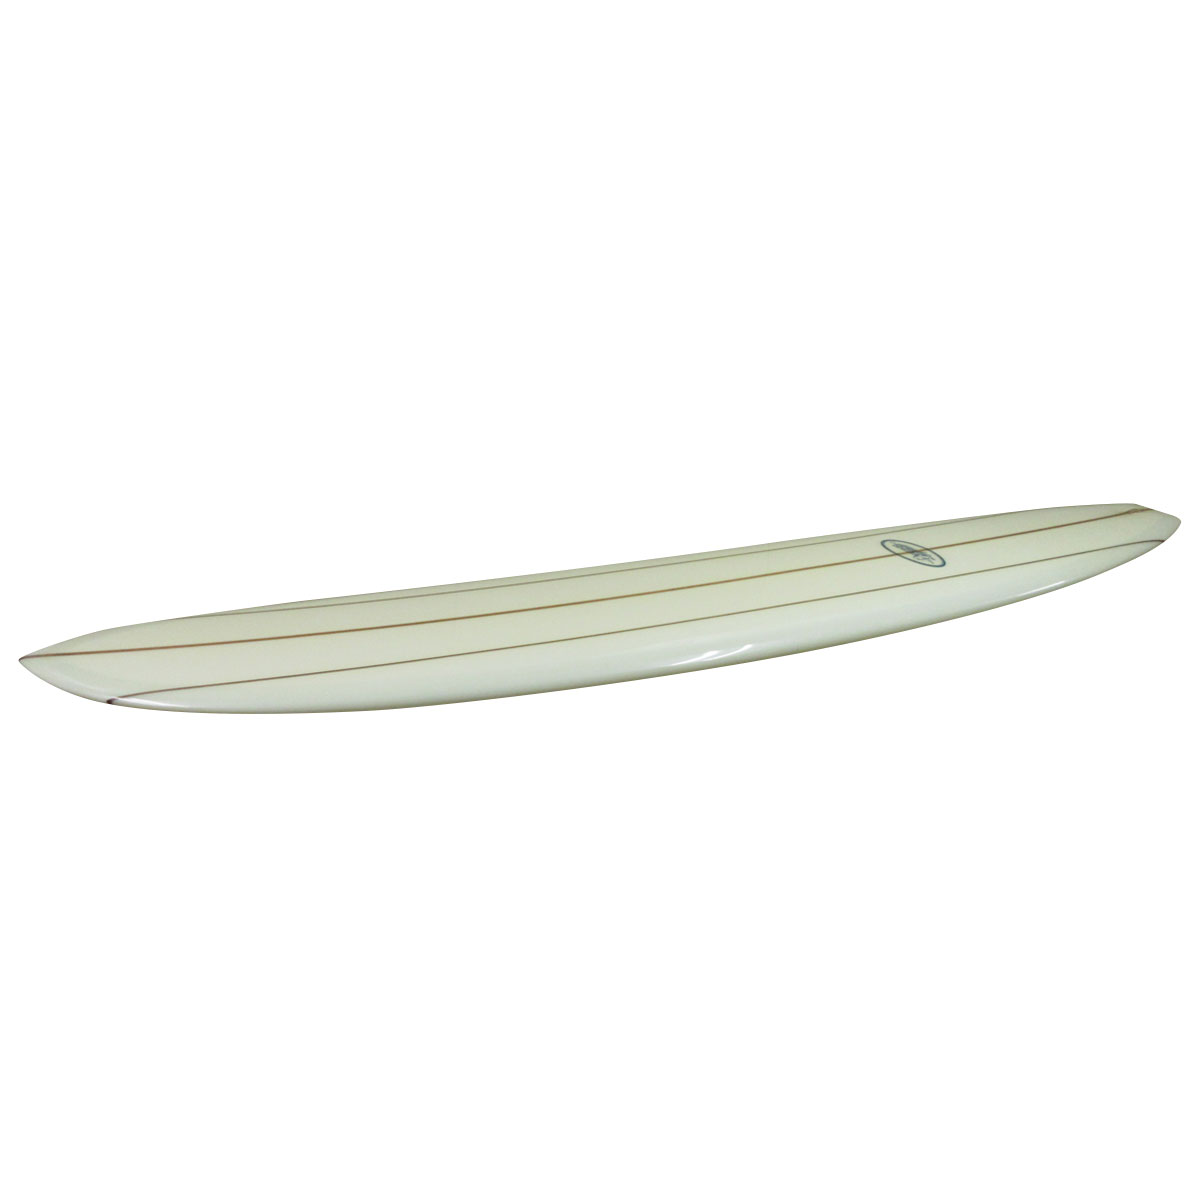 Degawa Surfboards / Custom Classic 9`5